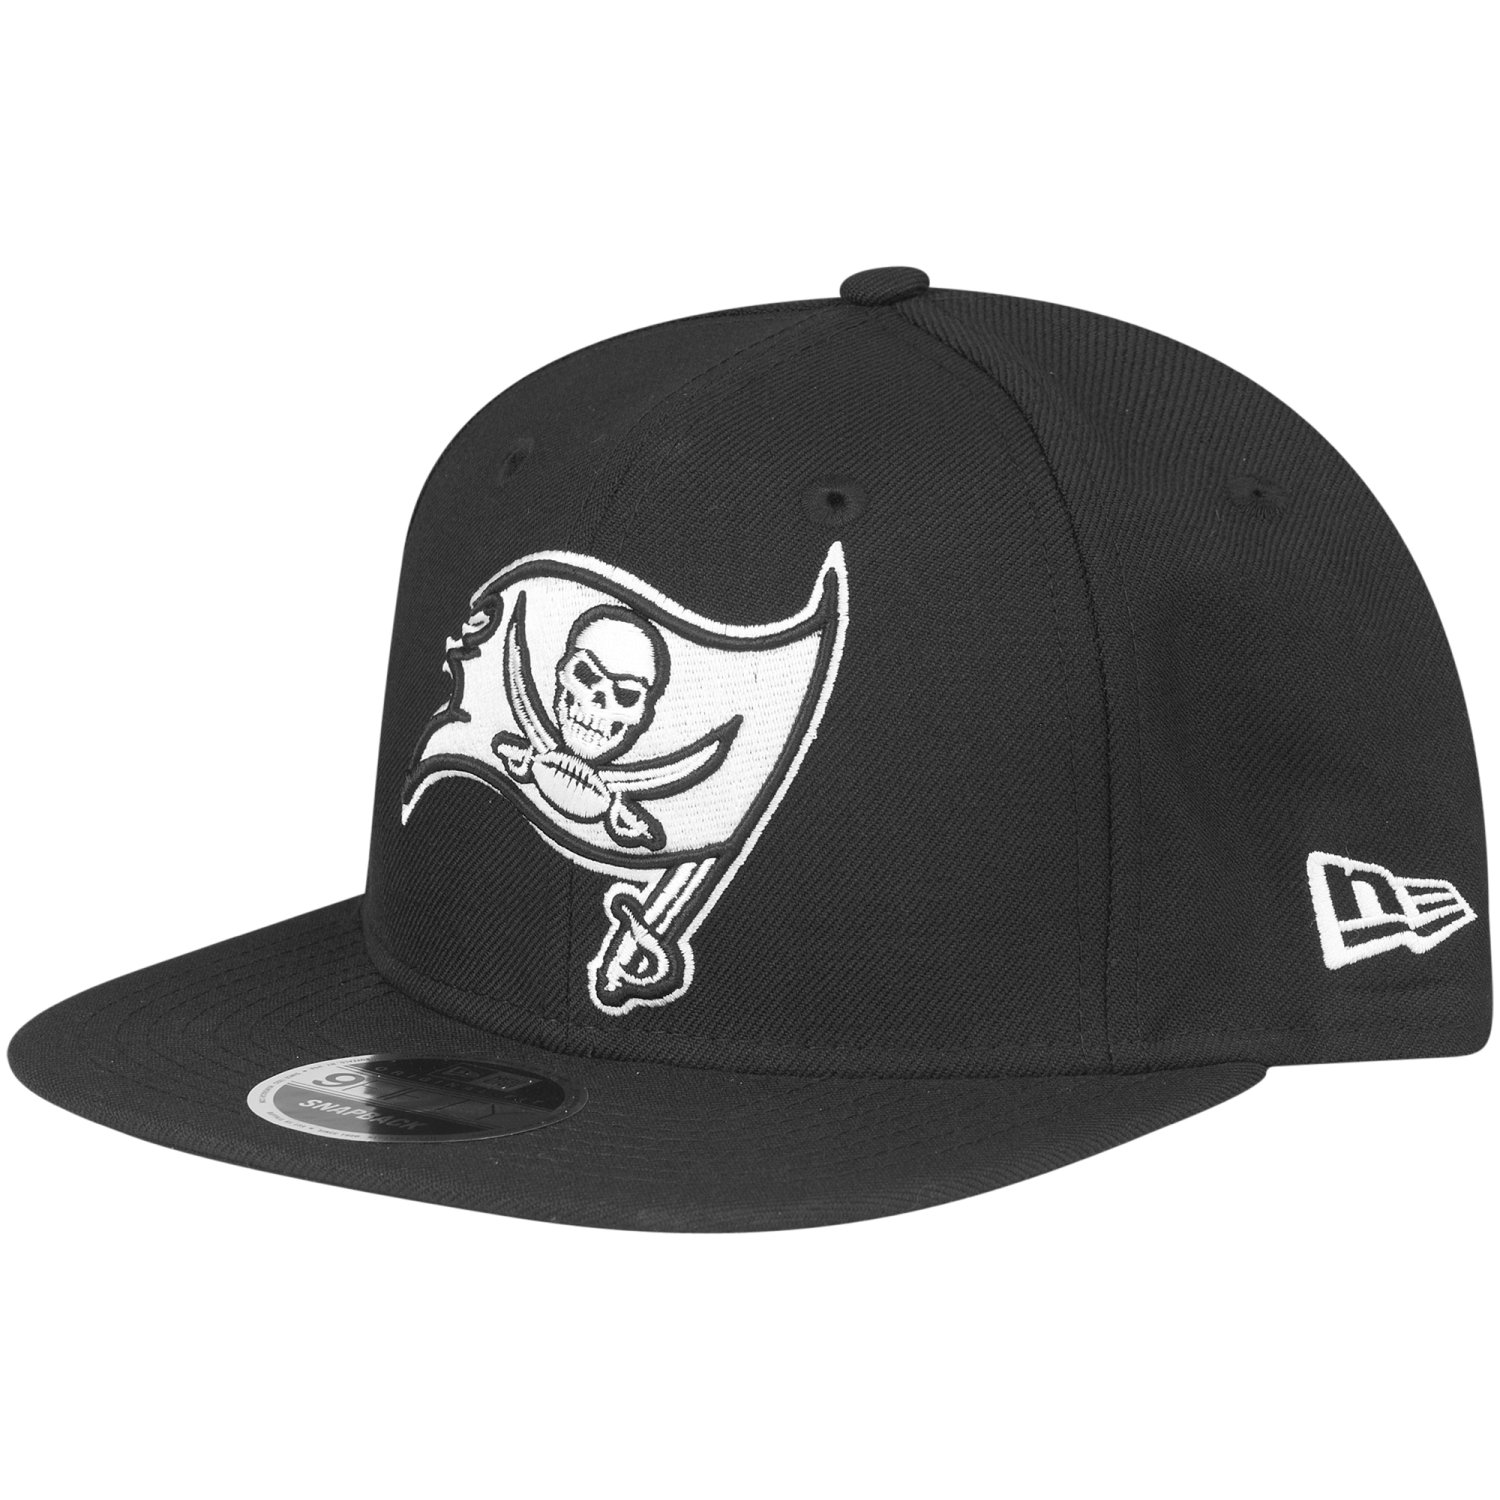 New Era 9Fifty Snapback Cap - Tampa Bay Buccaneers black | Snapback ...